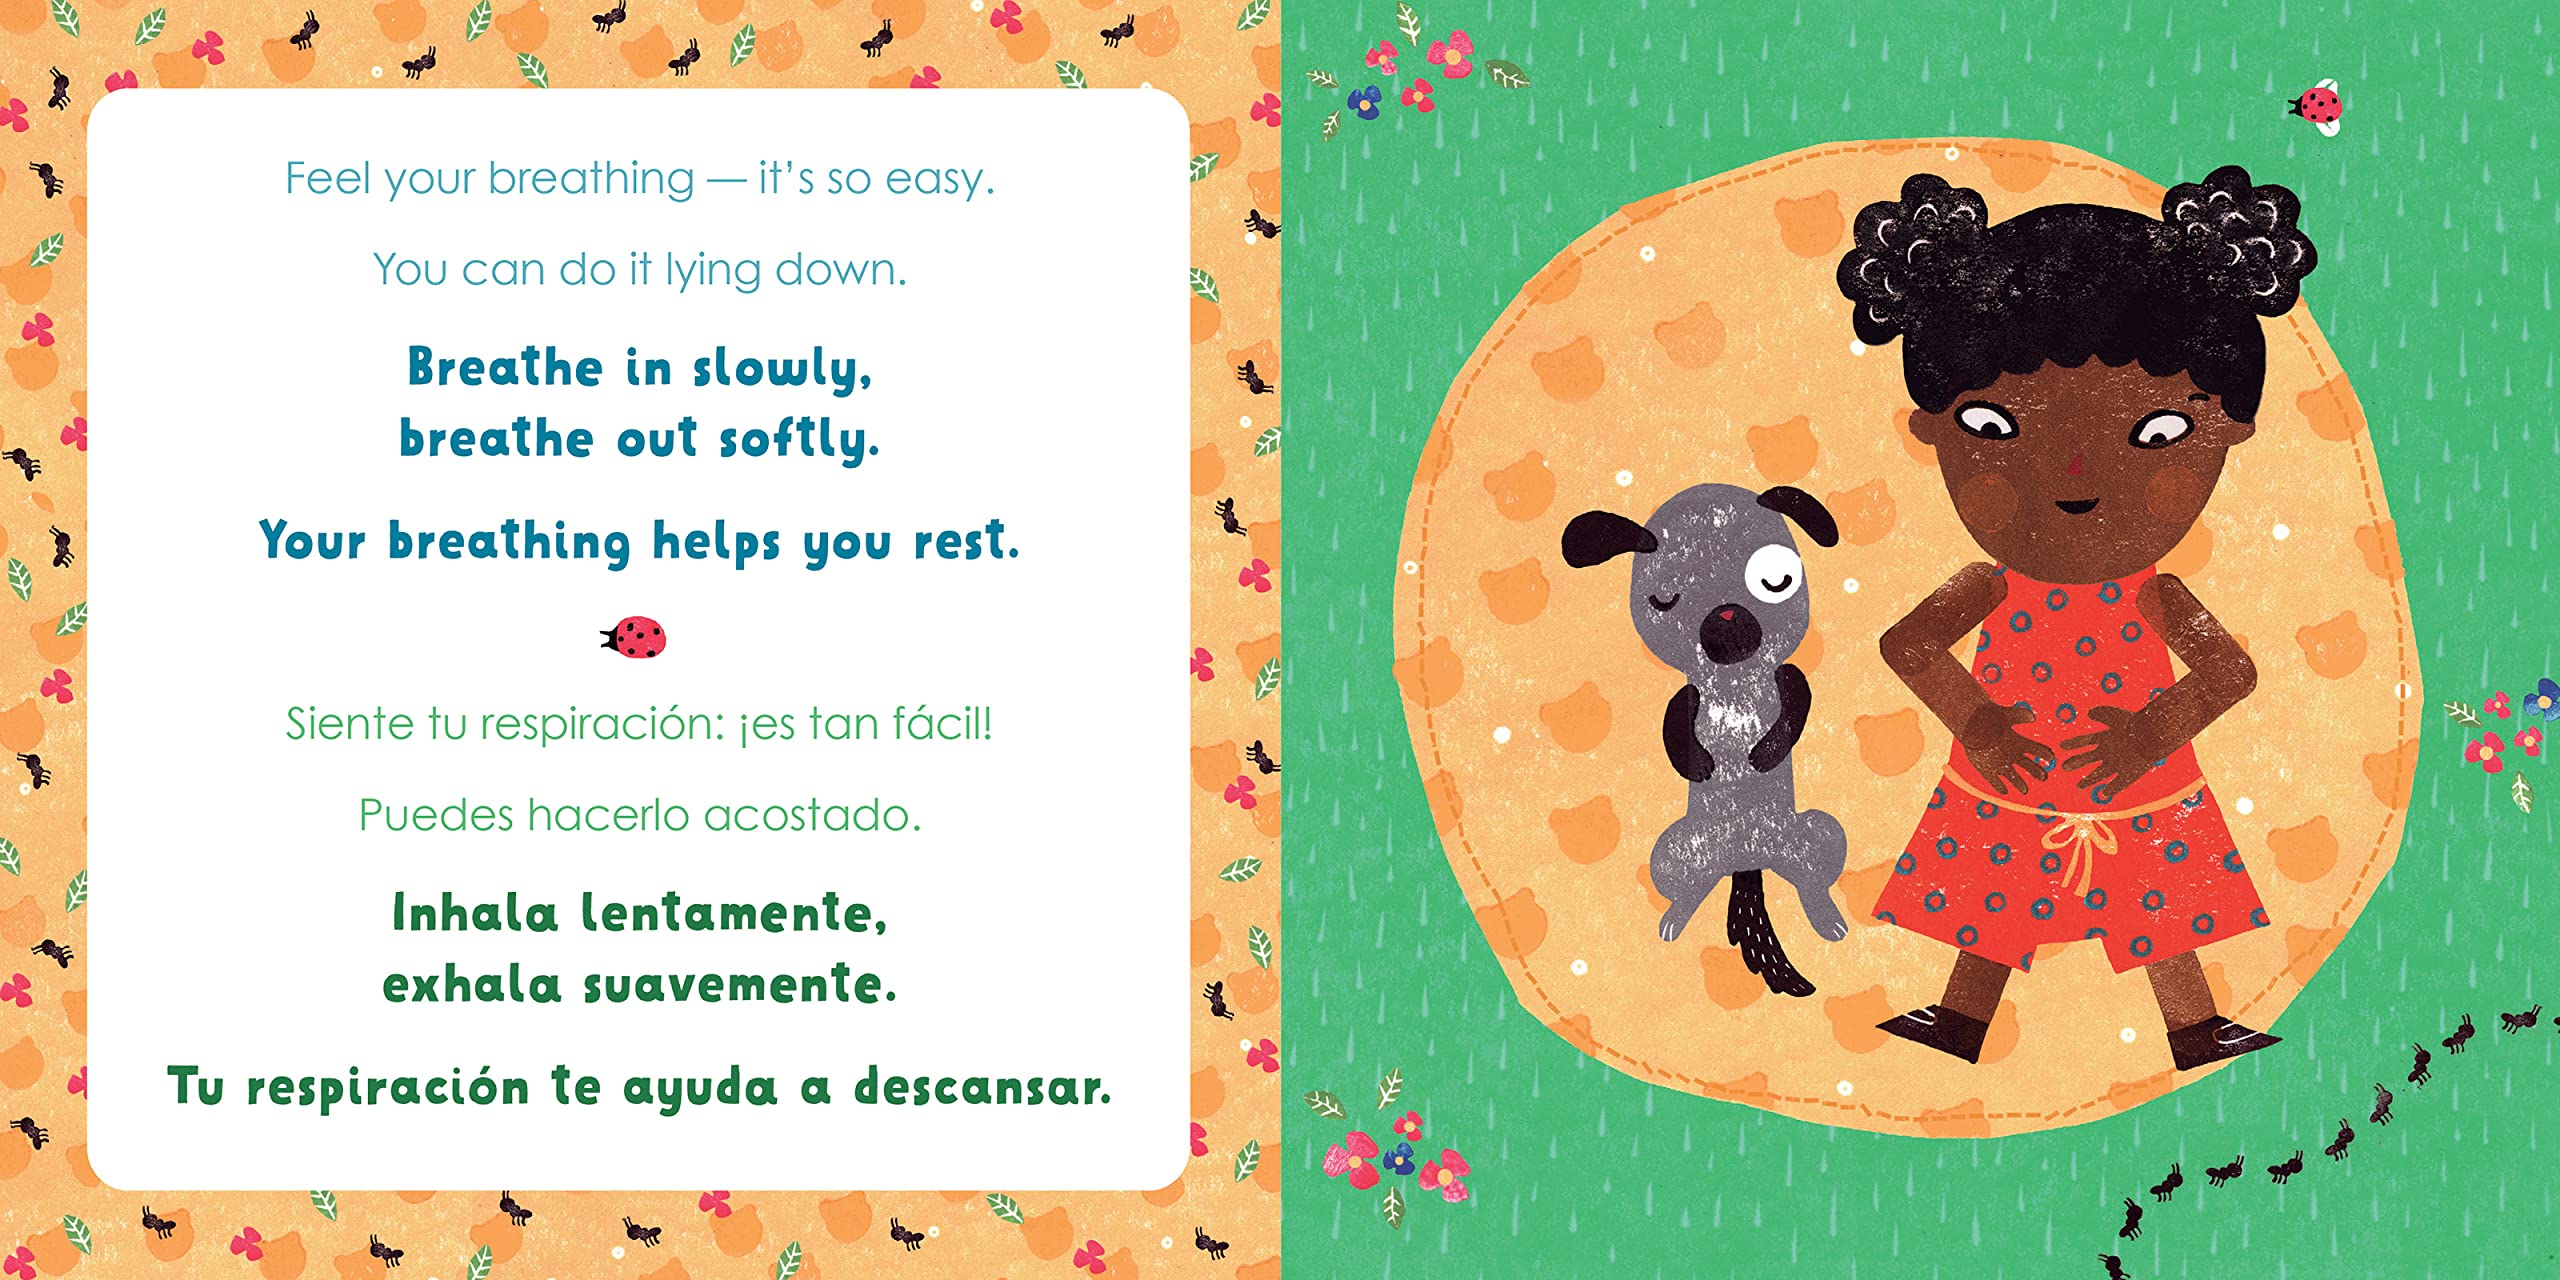 Mindful Tots: Tummy Ride / Niños Mindful: Siente tu barriguita (English and Spanish Edition) (BB)